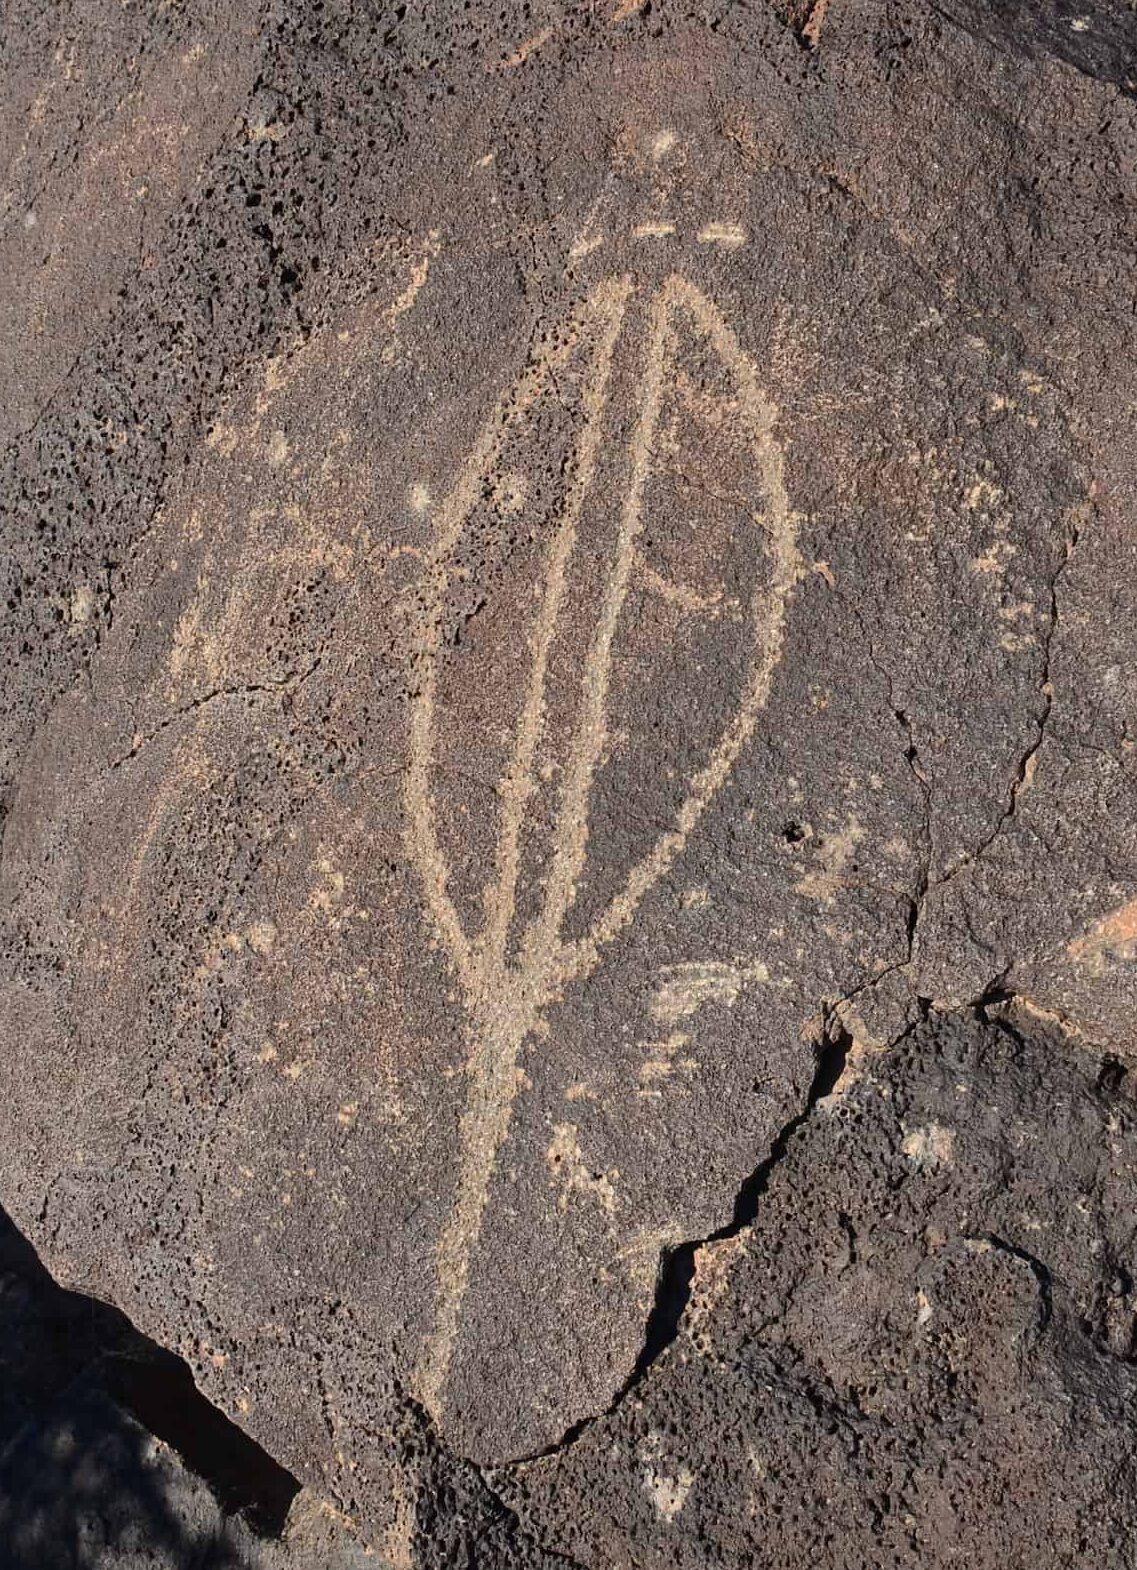 Petroglyph along the Macaw Trail